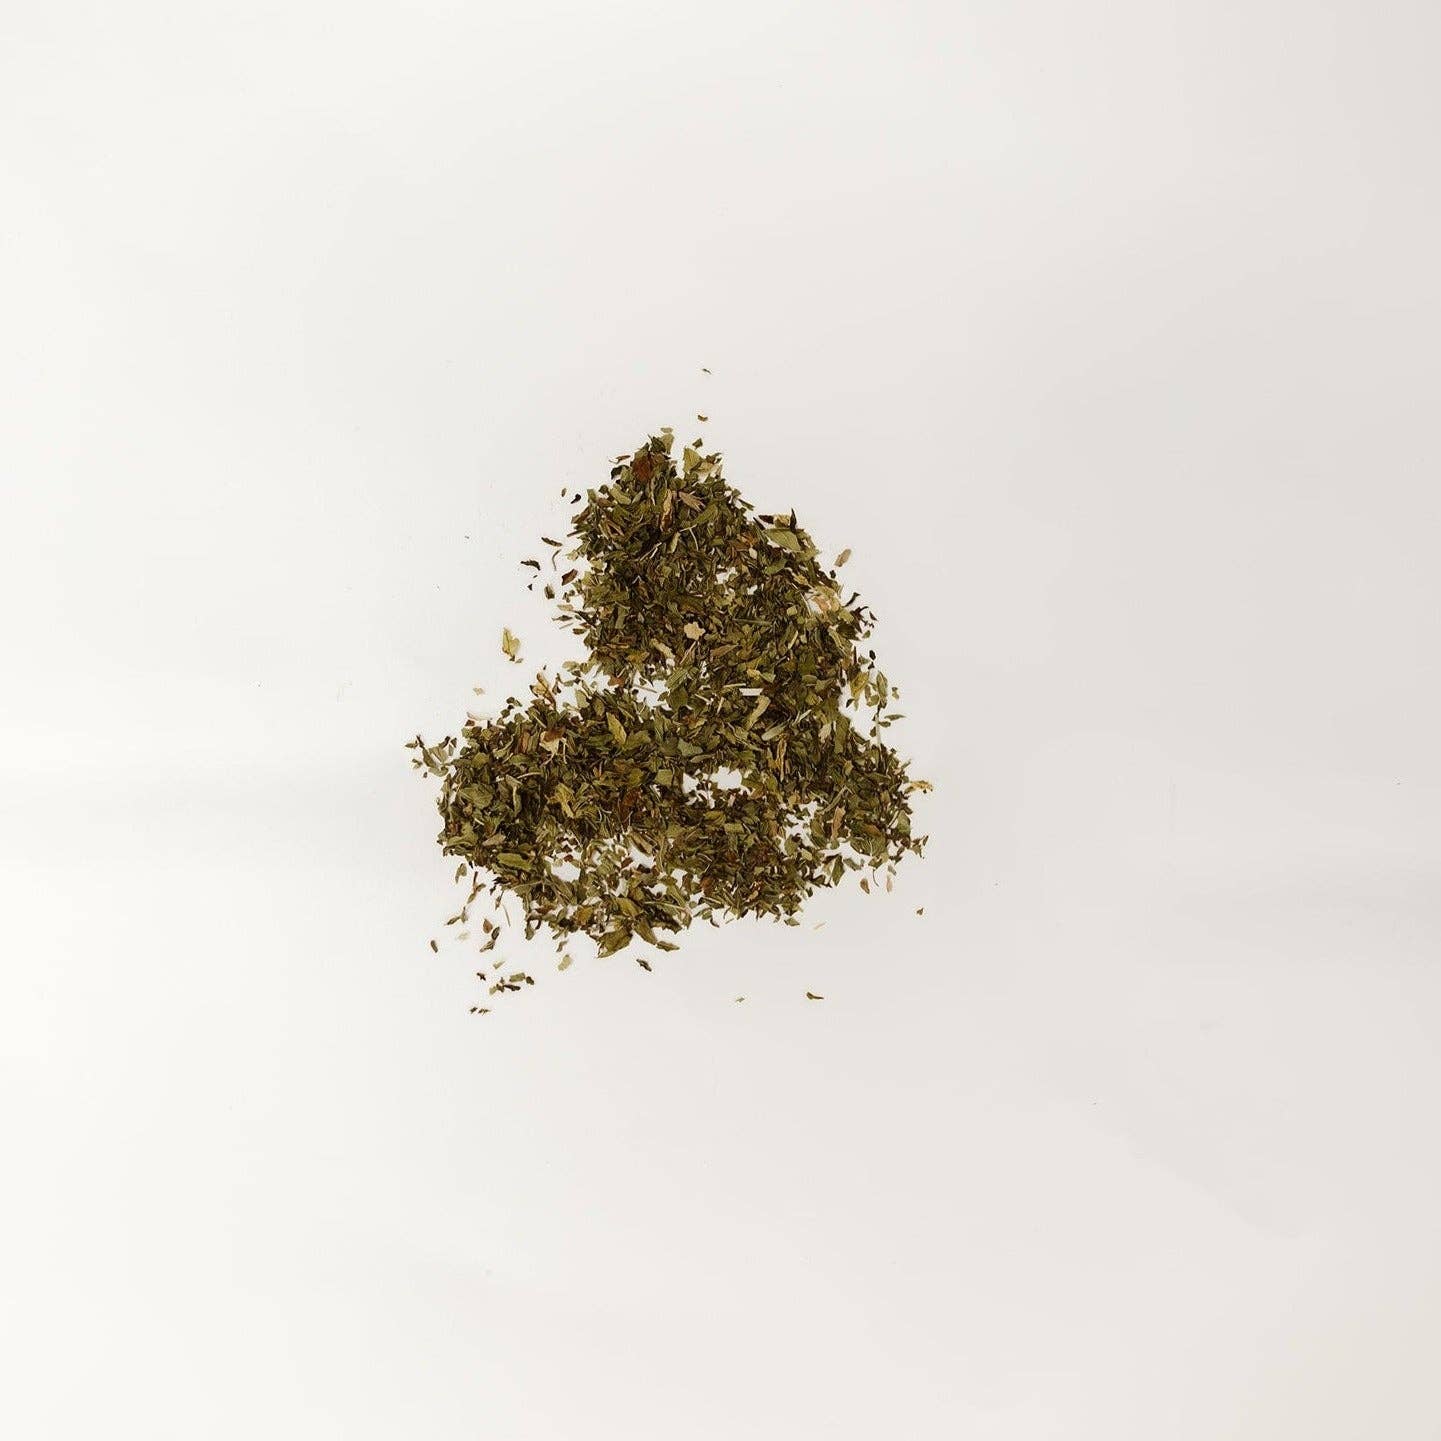 Bush Berry - Mighty Minty - loose leaf tea